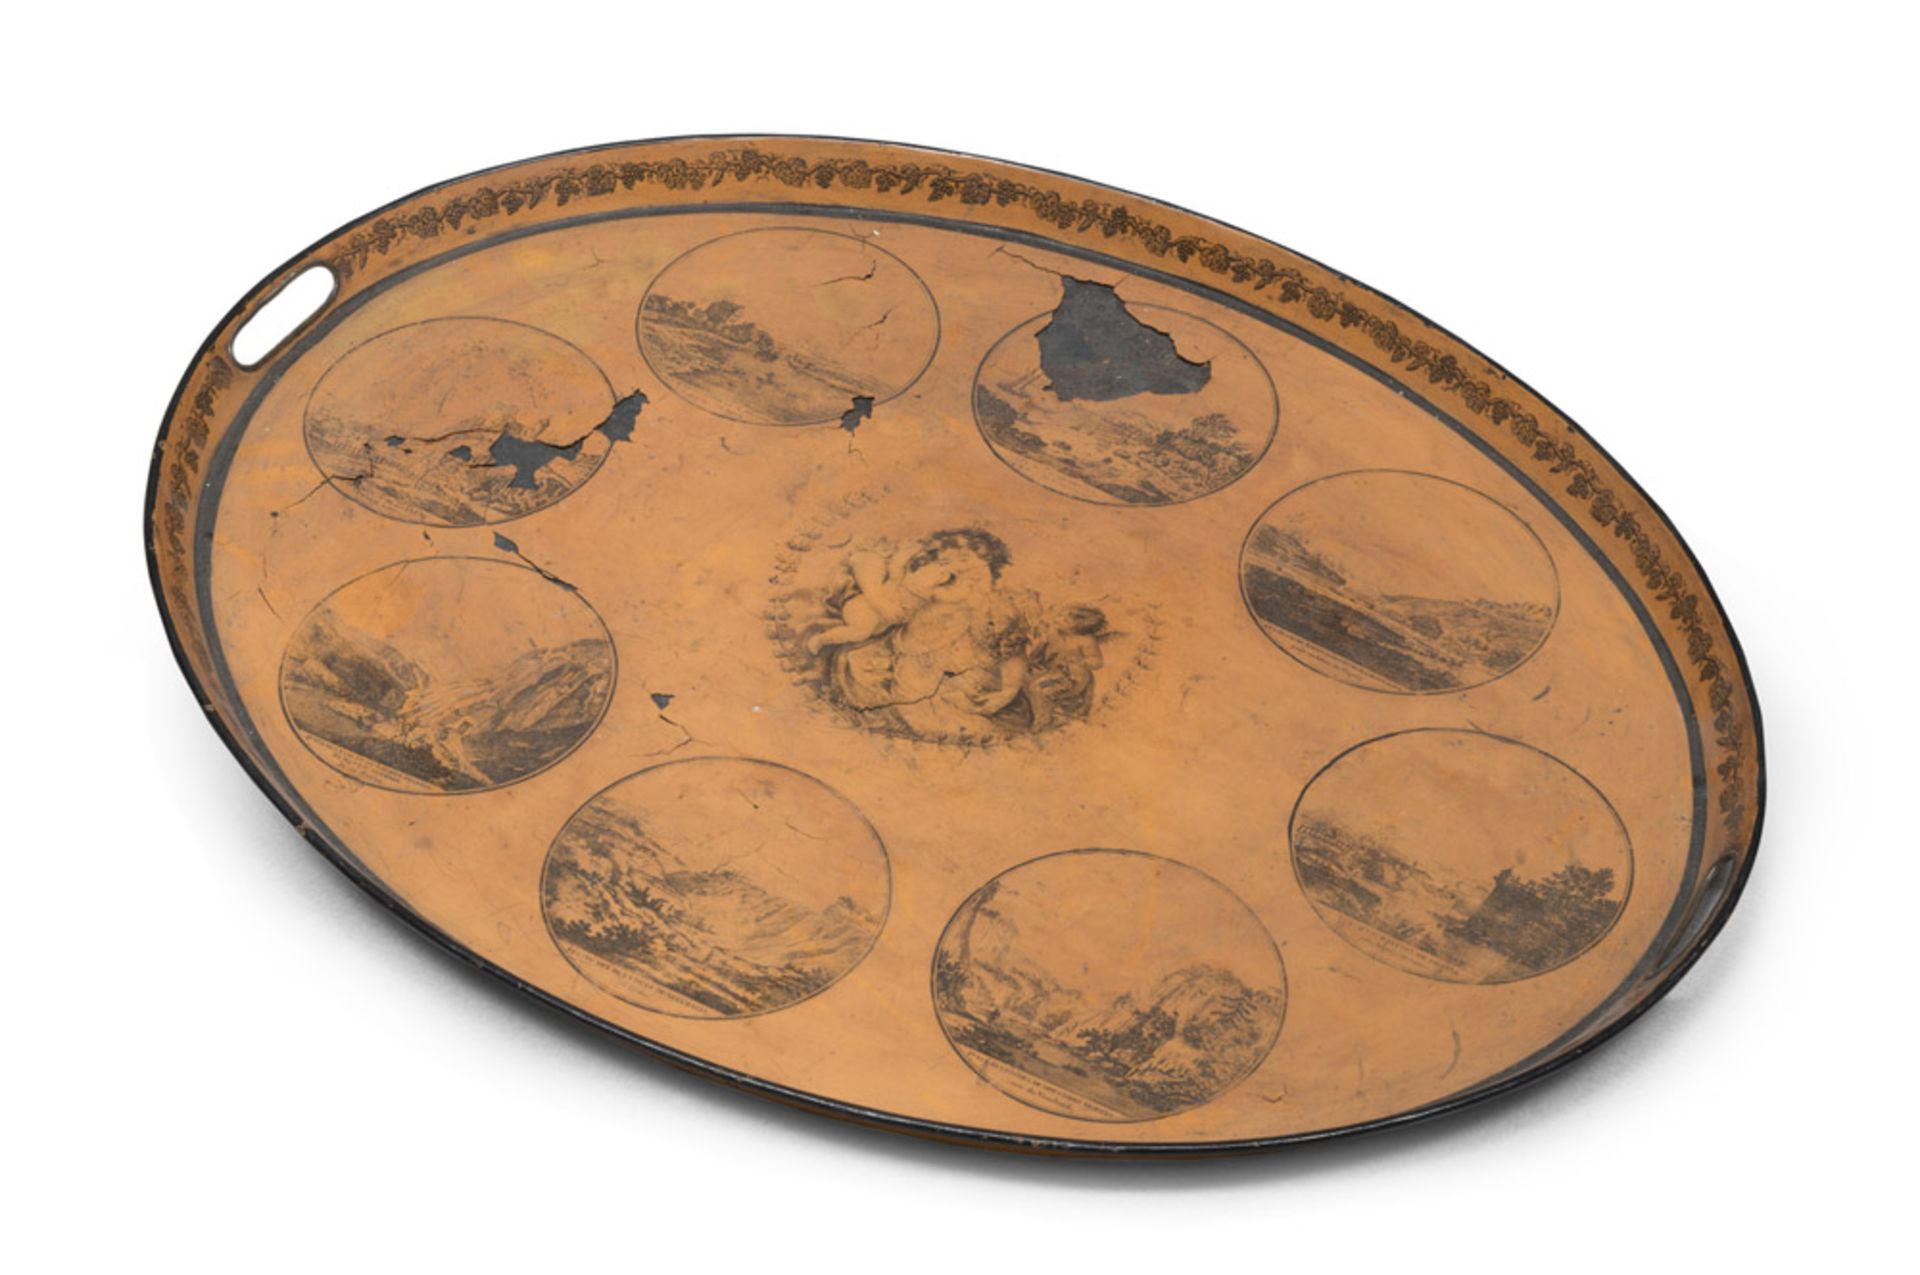 Metal Tray, France 19th century. Measures cm. 68 x 53.VASSOIO IN METALLO, FRANCIA XIX SECOLO a lacca